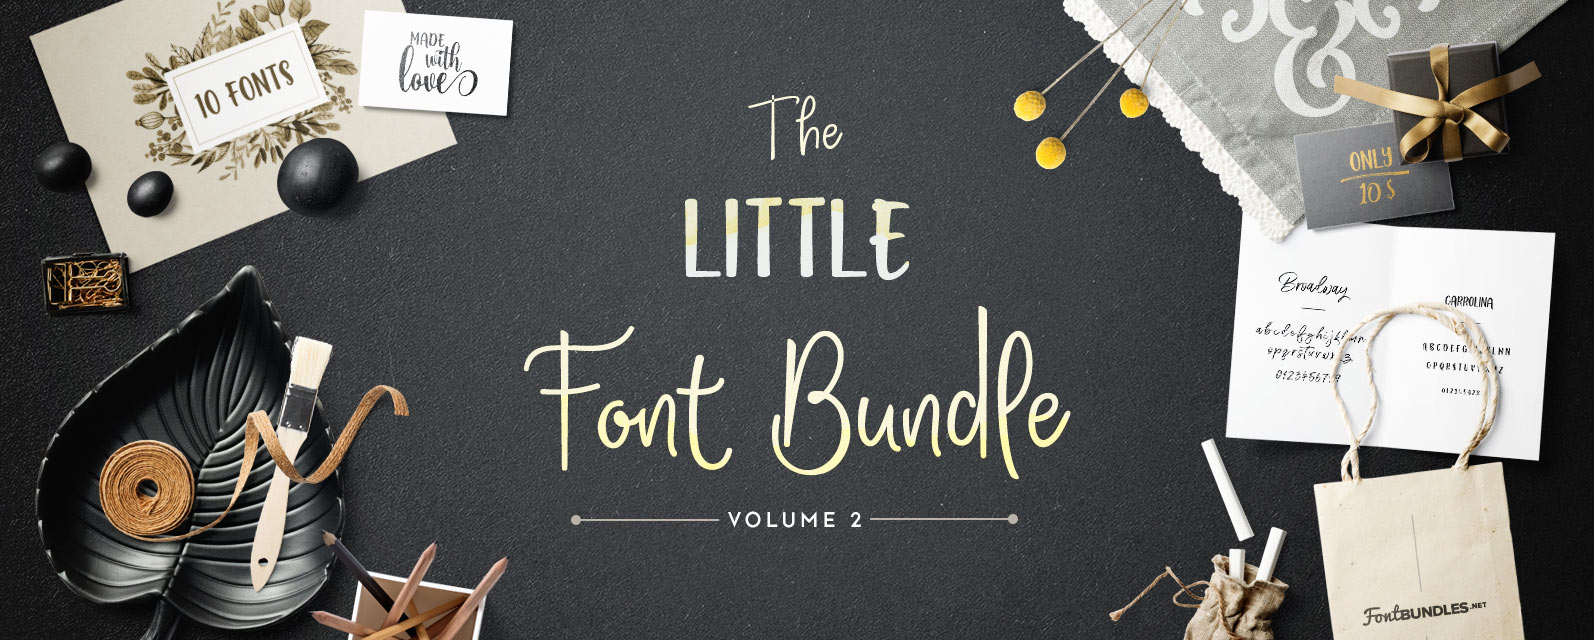 The Little Font Bundle Volume II Cover